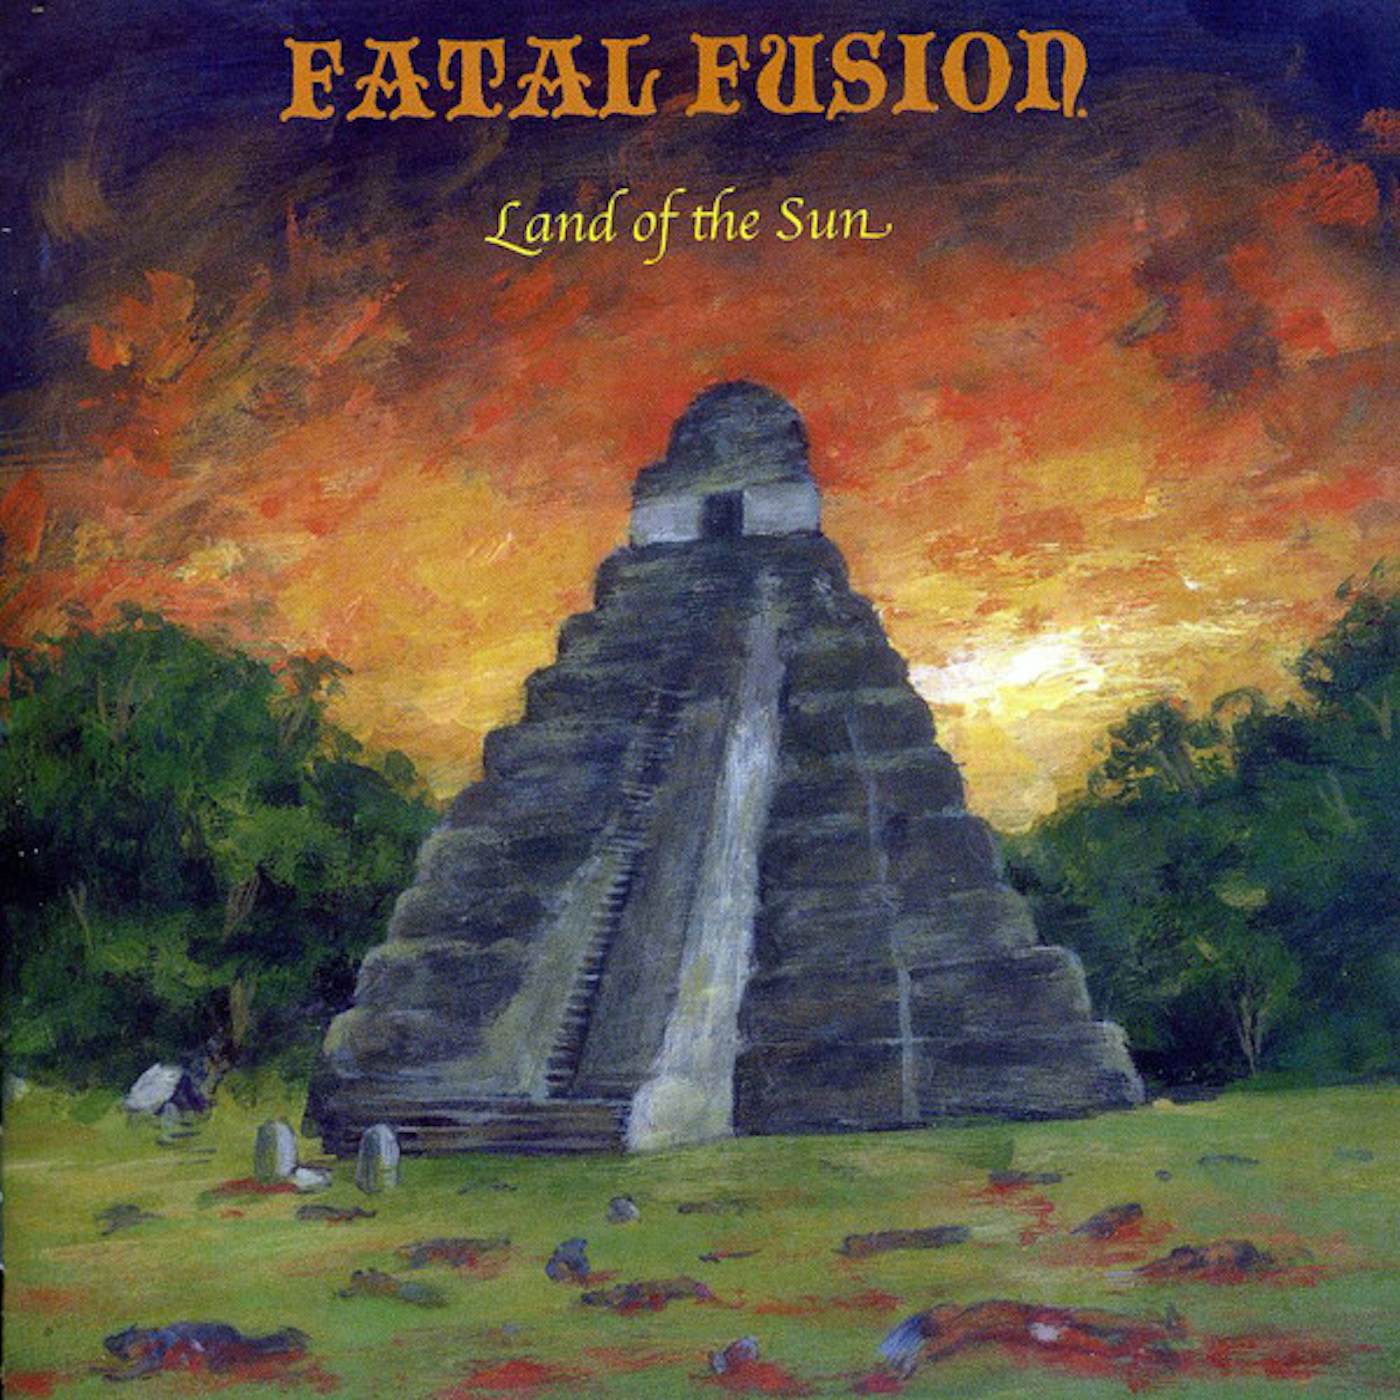 Fatal Fusion Land of the sun Vinyl Record